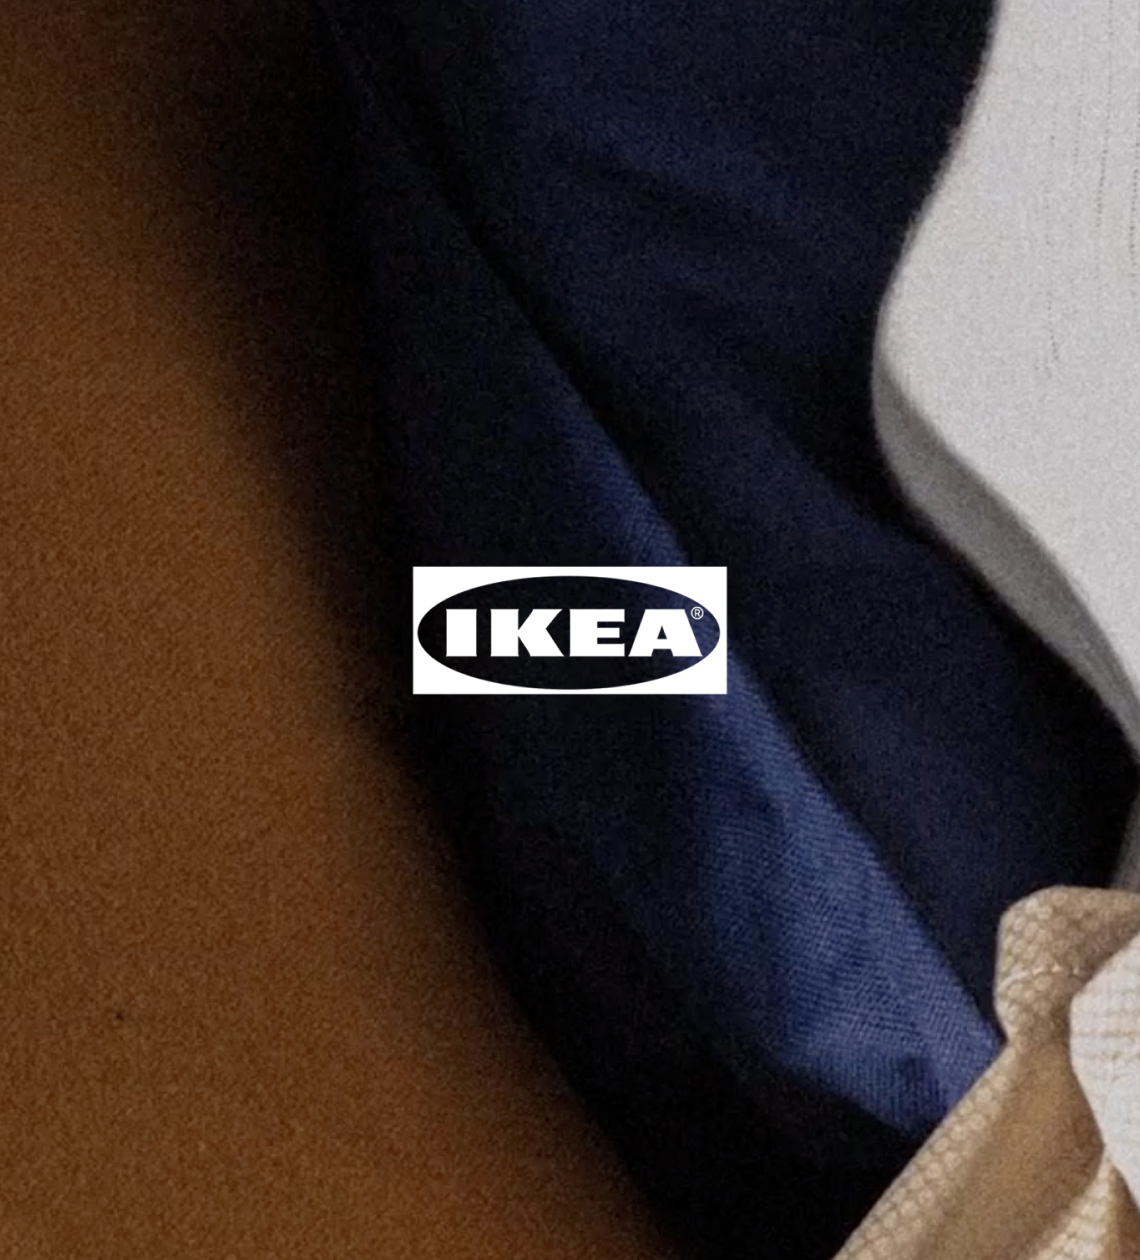 IKEA Studio AR SDK for an innovative mobile shopping experience.